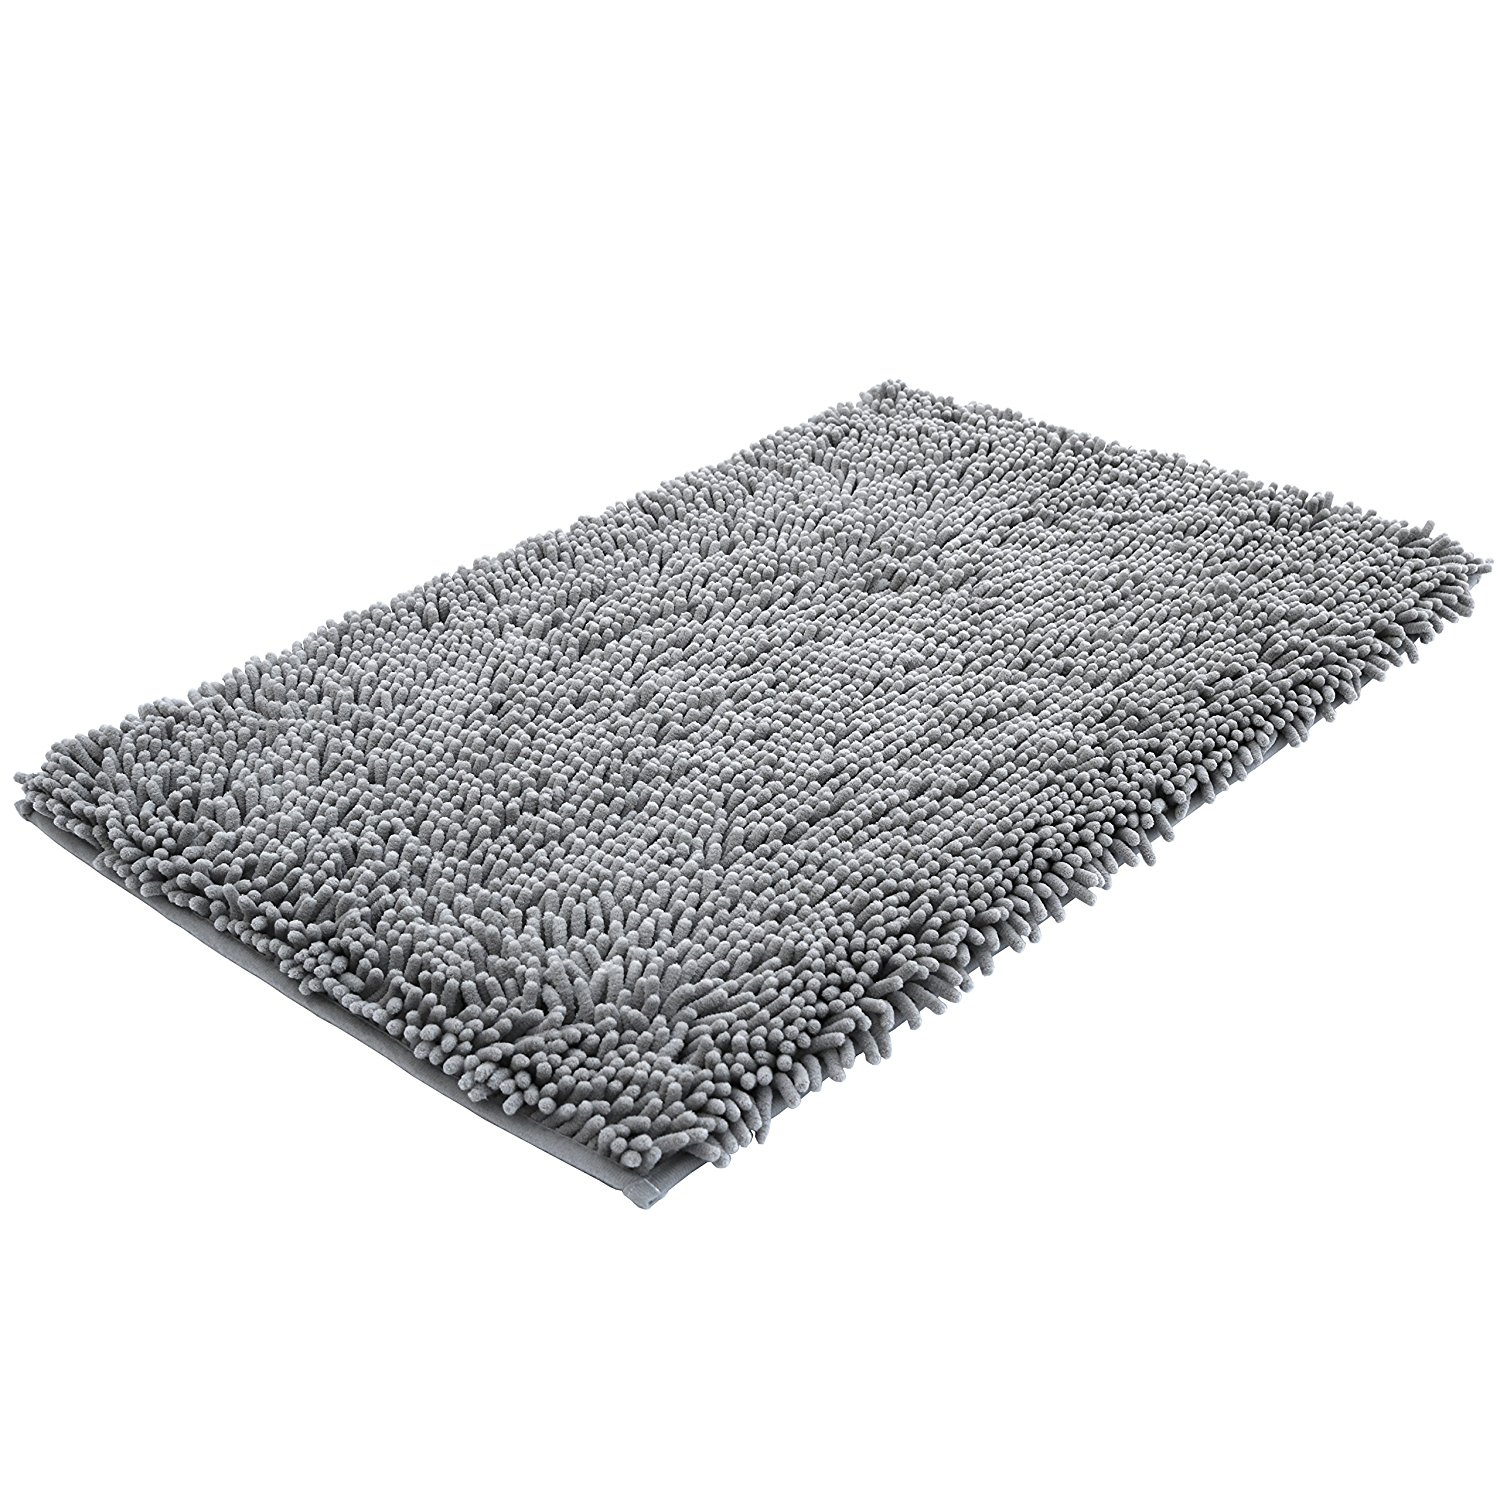 bath rugs amazon.com: super soft bath mat microfiber shag bathroom rugs non slip  absorbent DLTZIWO